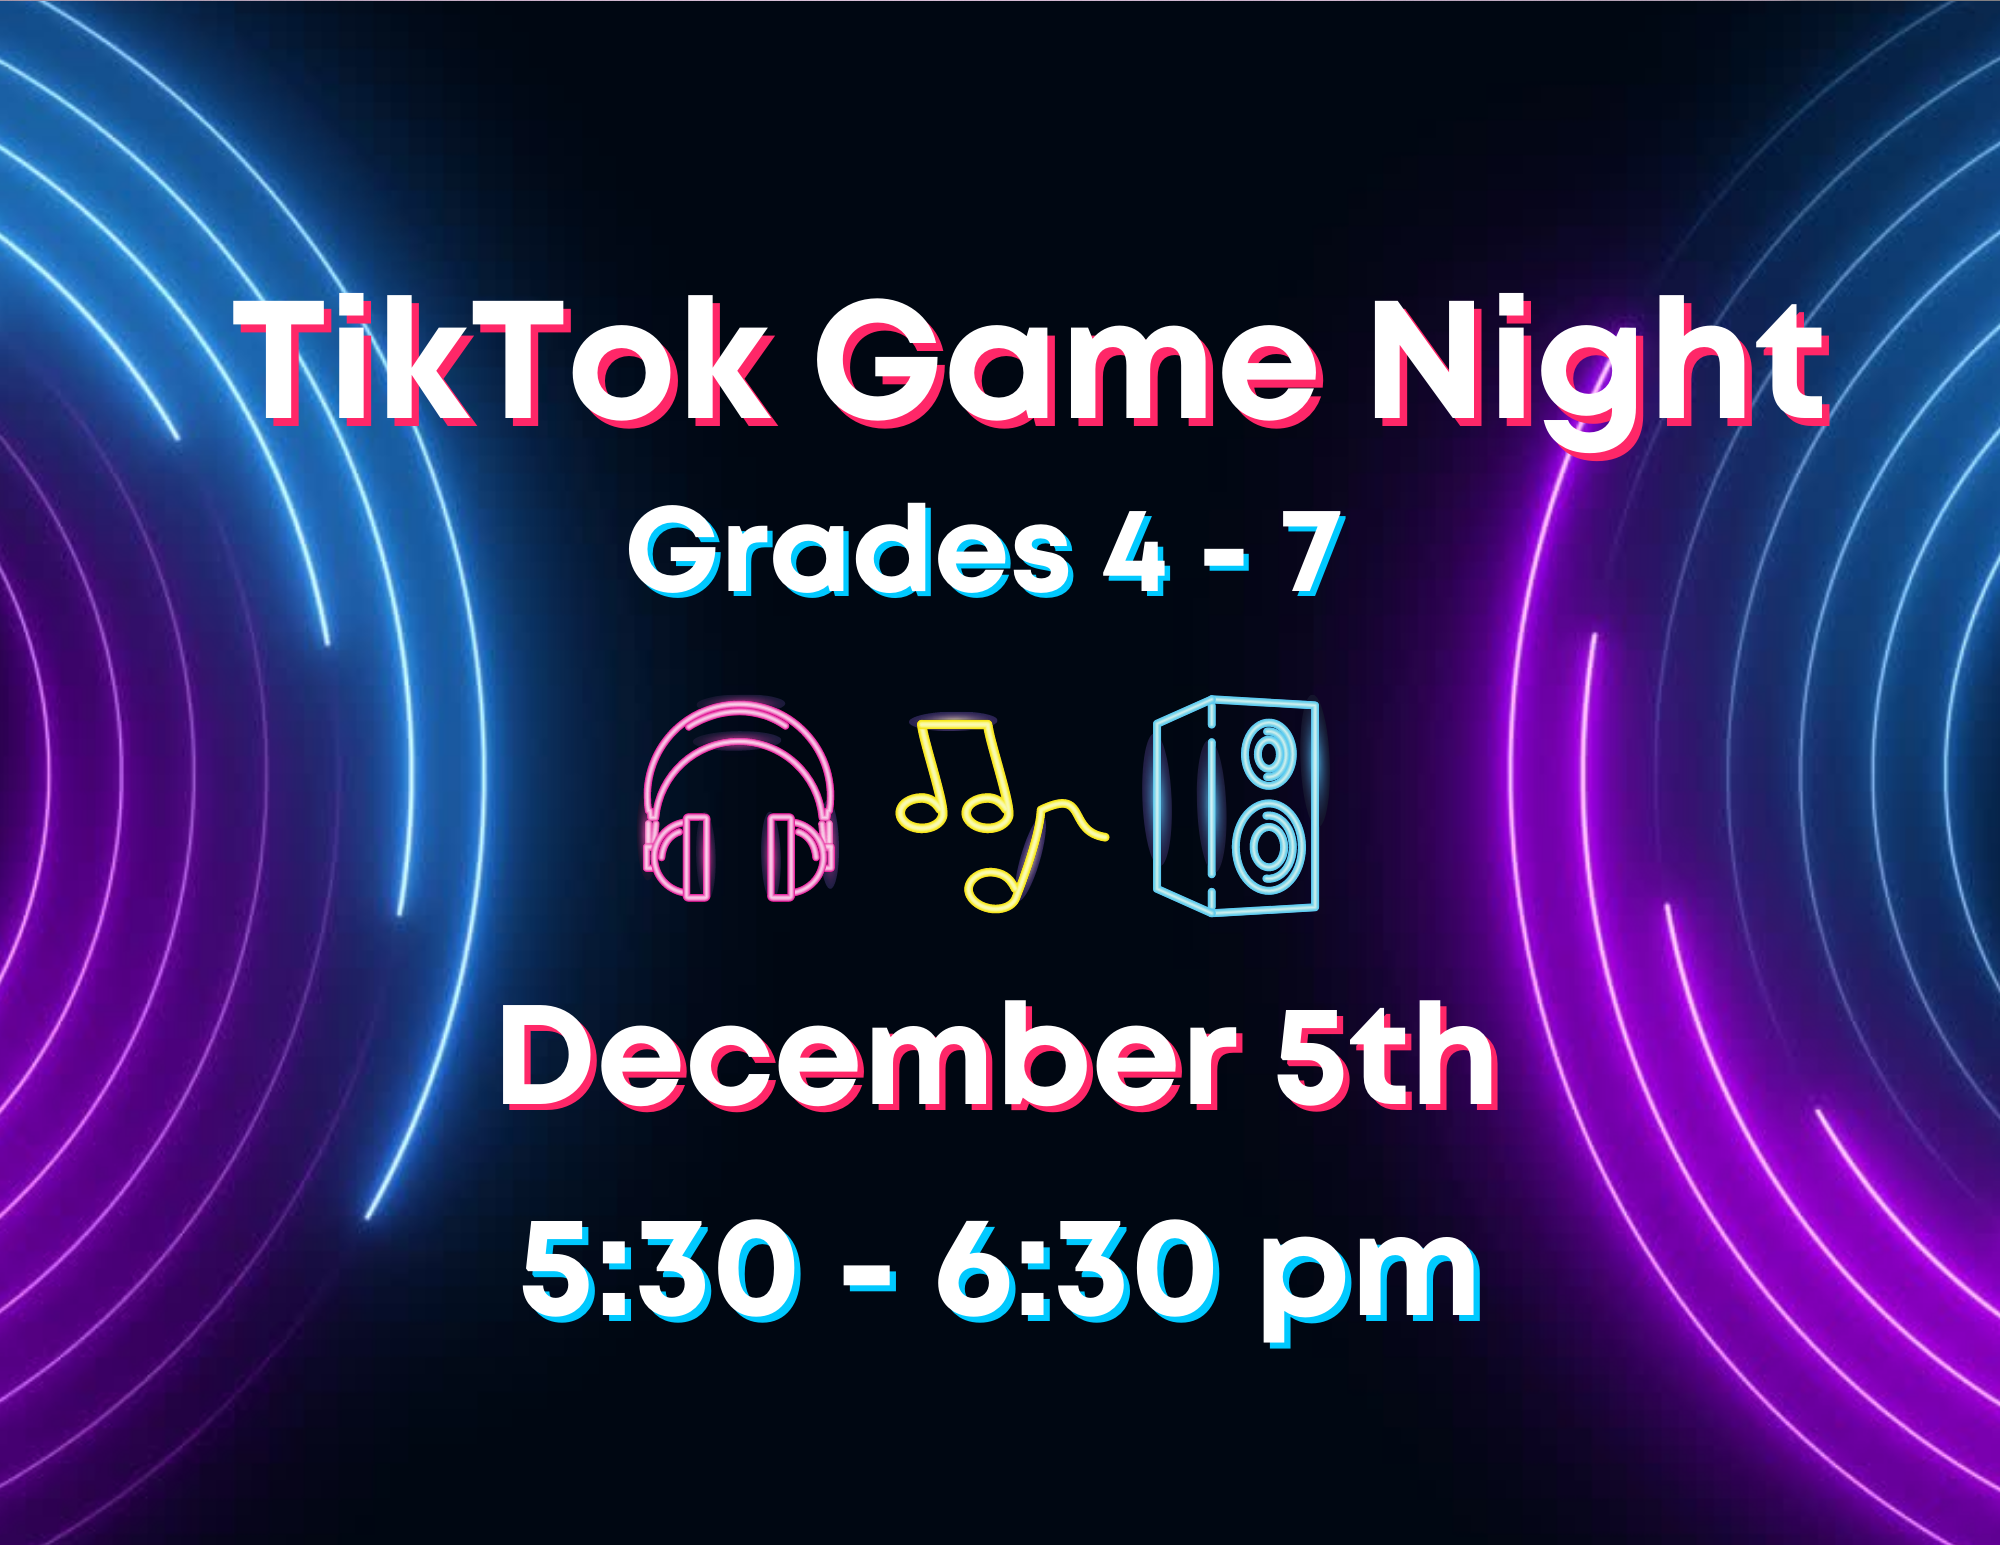 Program flyer featuring the following text "TikTok Game Night. Grades 4-7. December 5th. 5:30-6:30pm."